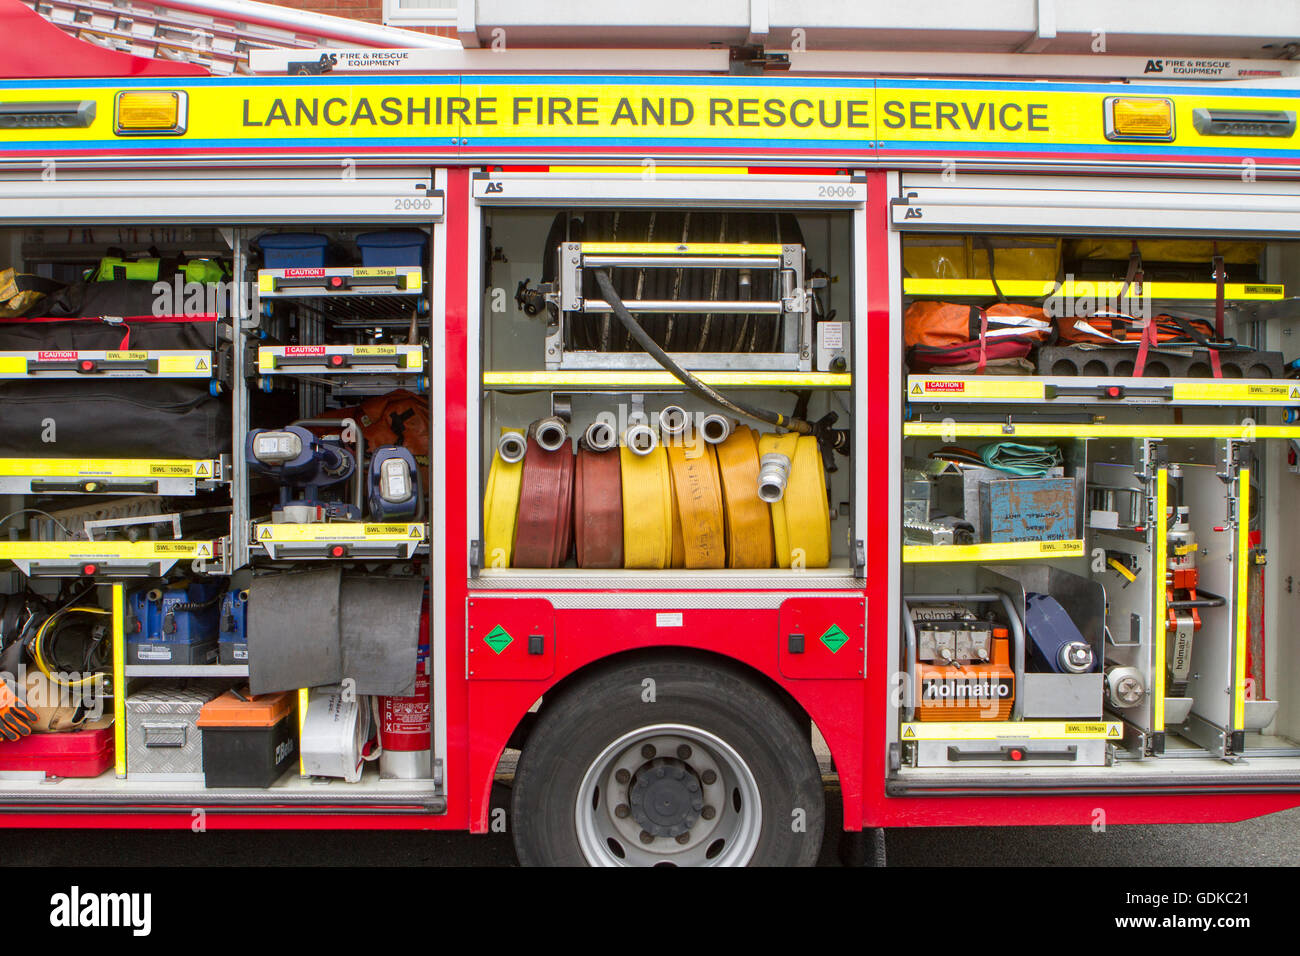 Lancashire Fire And Rescue Serivce Fireman Fire Brigade Firefighter